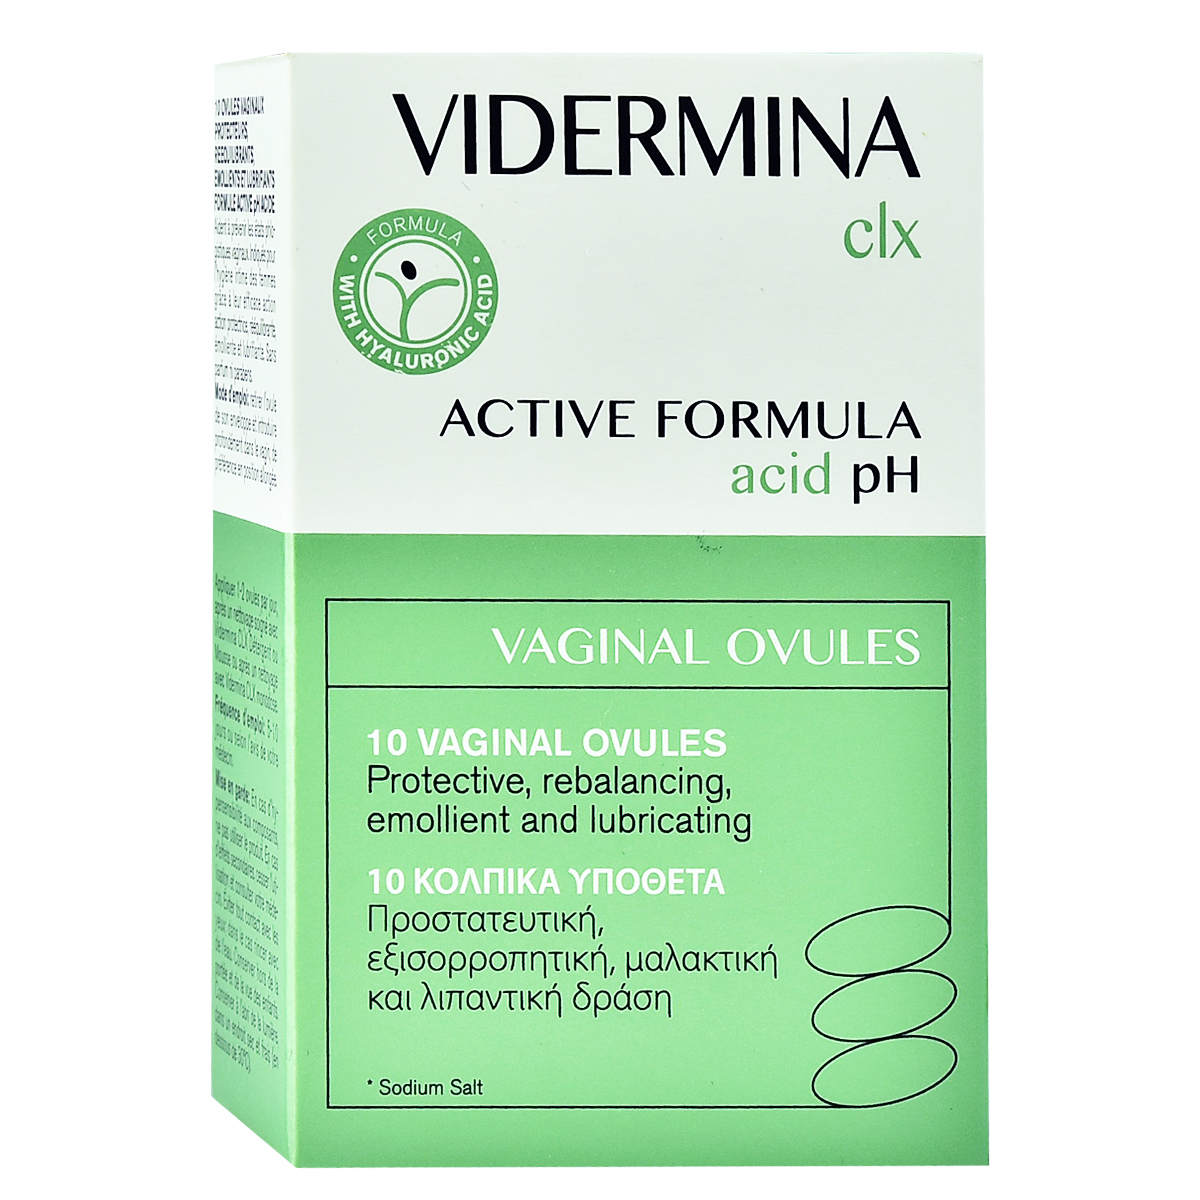 Vidermina Clx Active Formula 10 Vaginal Ovules 0262